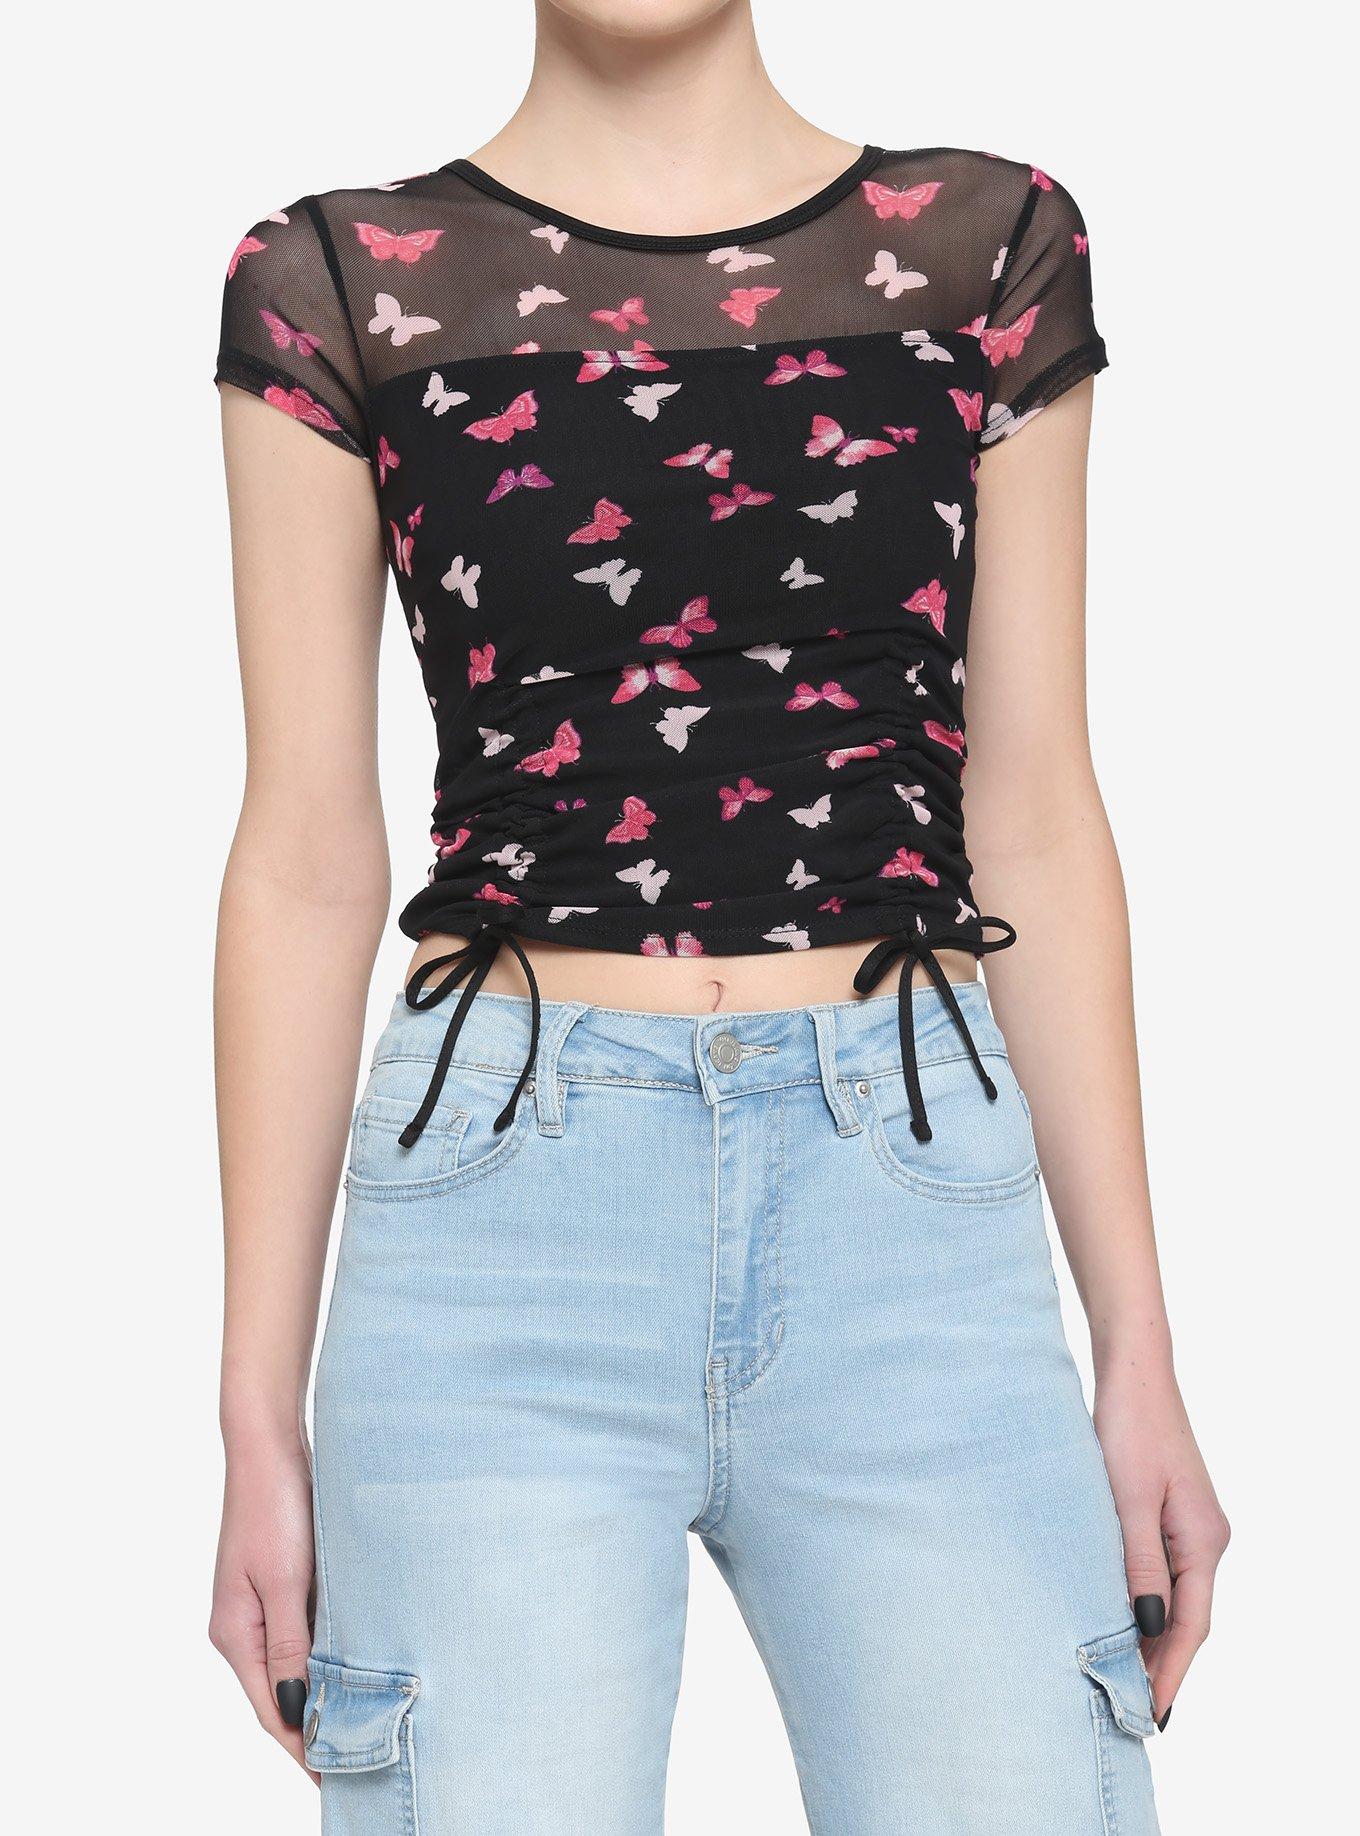 Black & Pink Butterfly Ruched Girls Crop Top, BLACK, hi-res